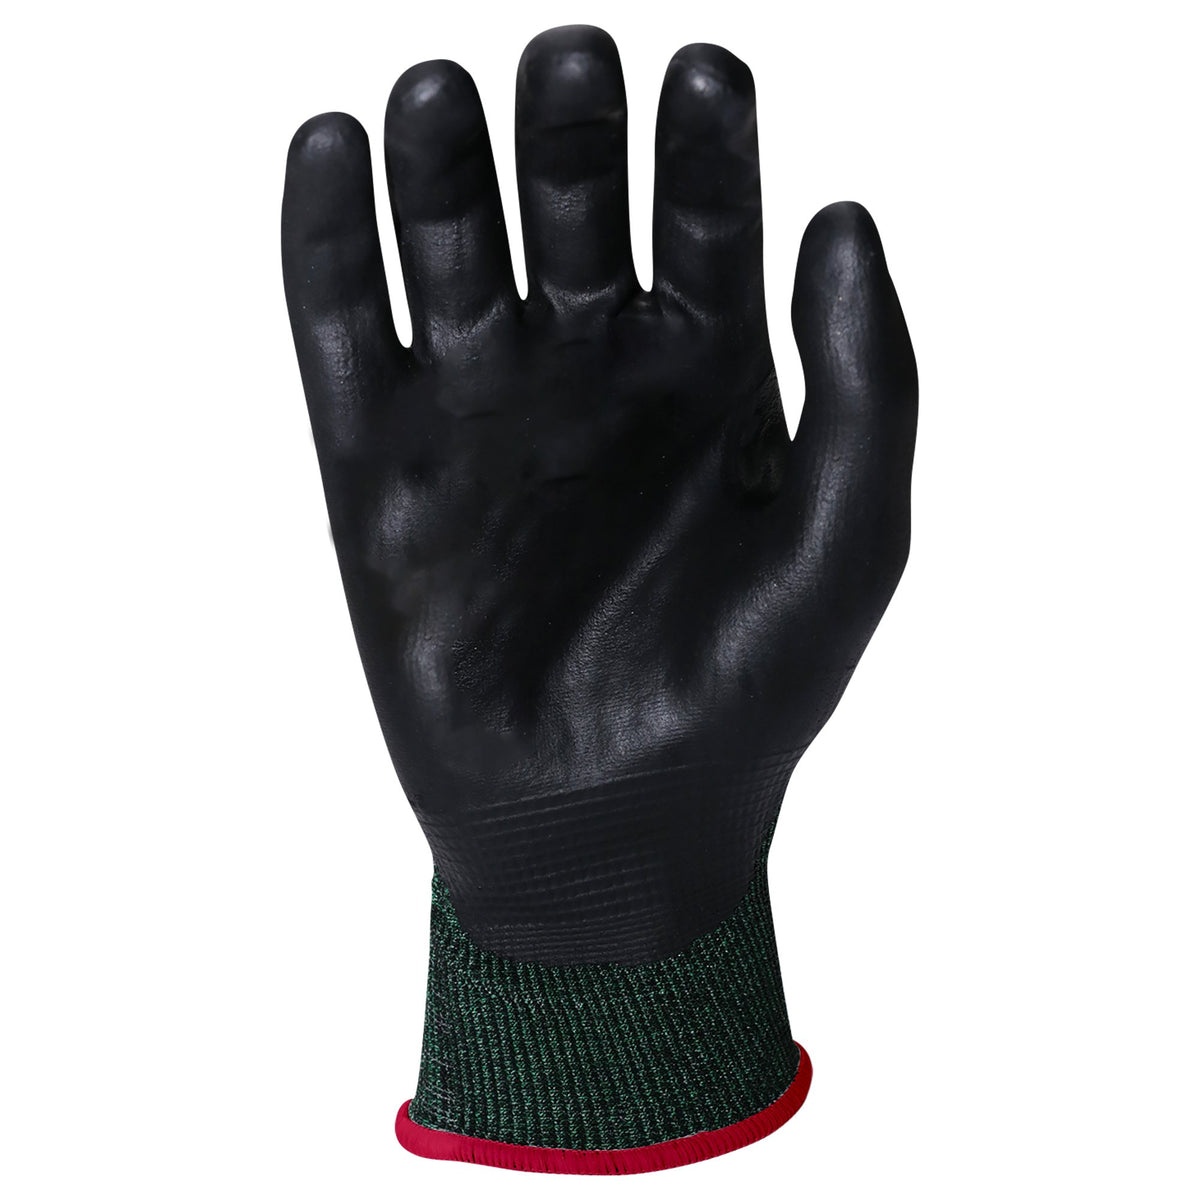 A2H-110 HPPE Cut Glove with Nitrile Micro-Foam Coating 1pair